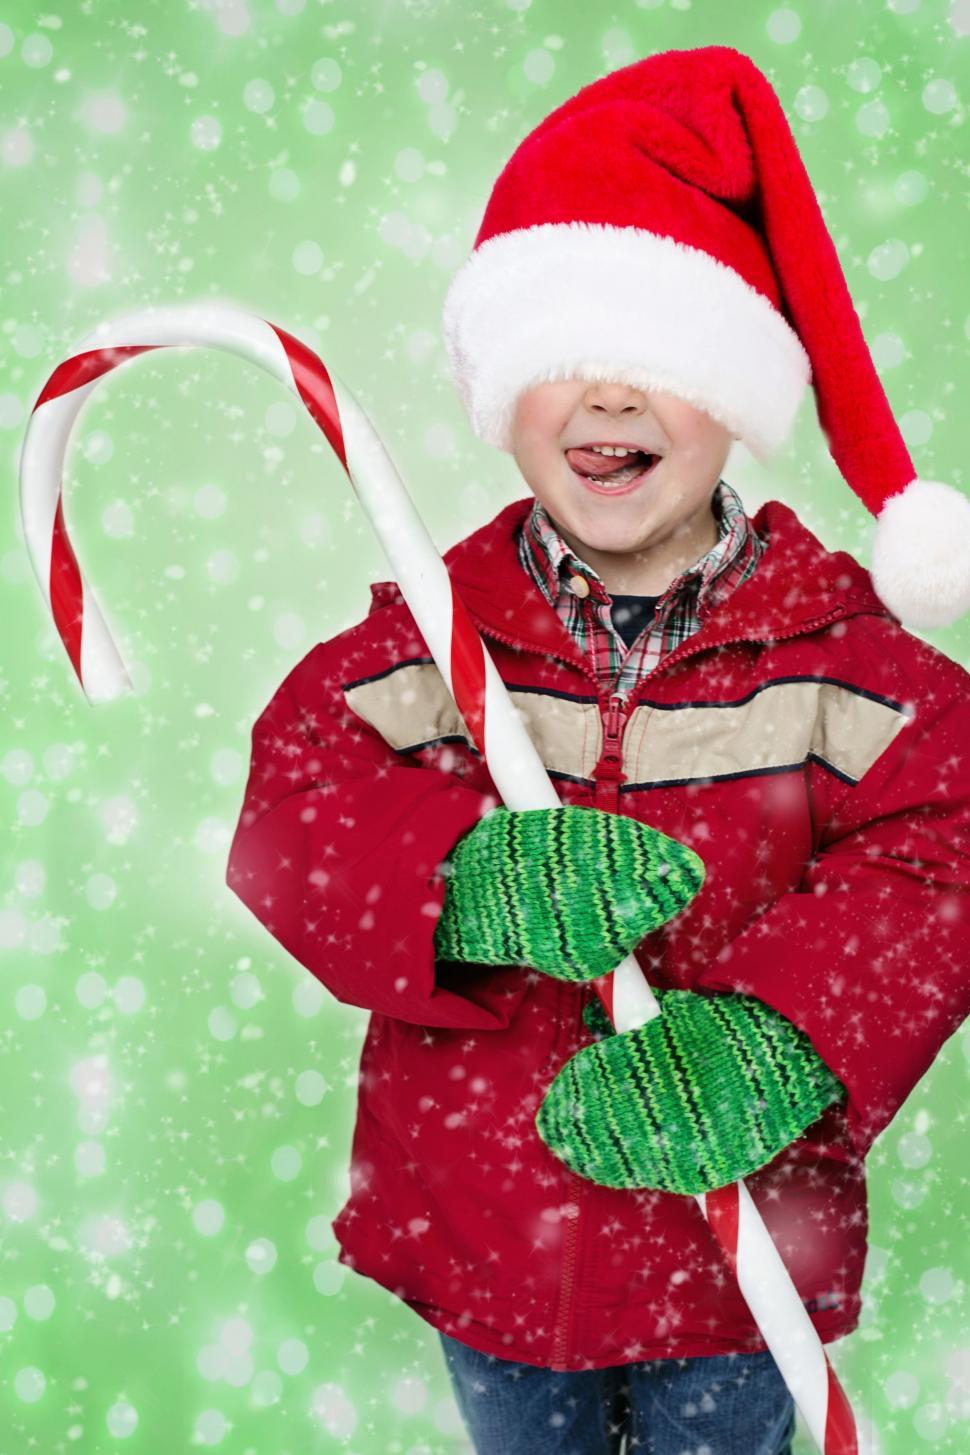 Free Image of Little Boy in Oversized Santa Hat - Snowy Green Background  